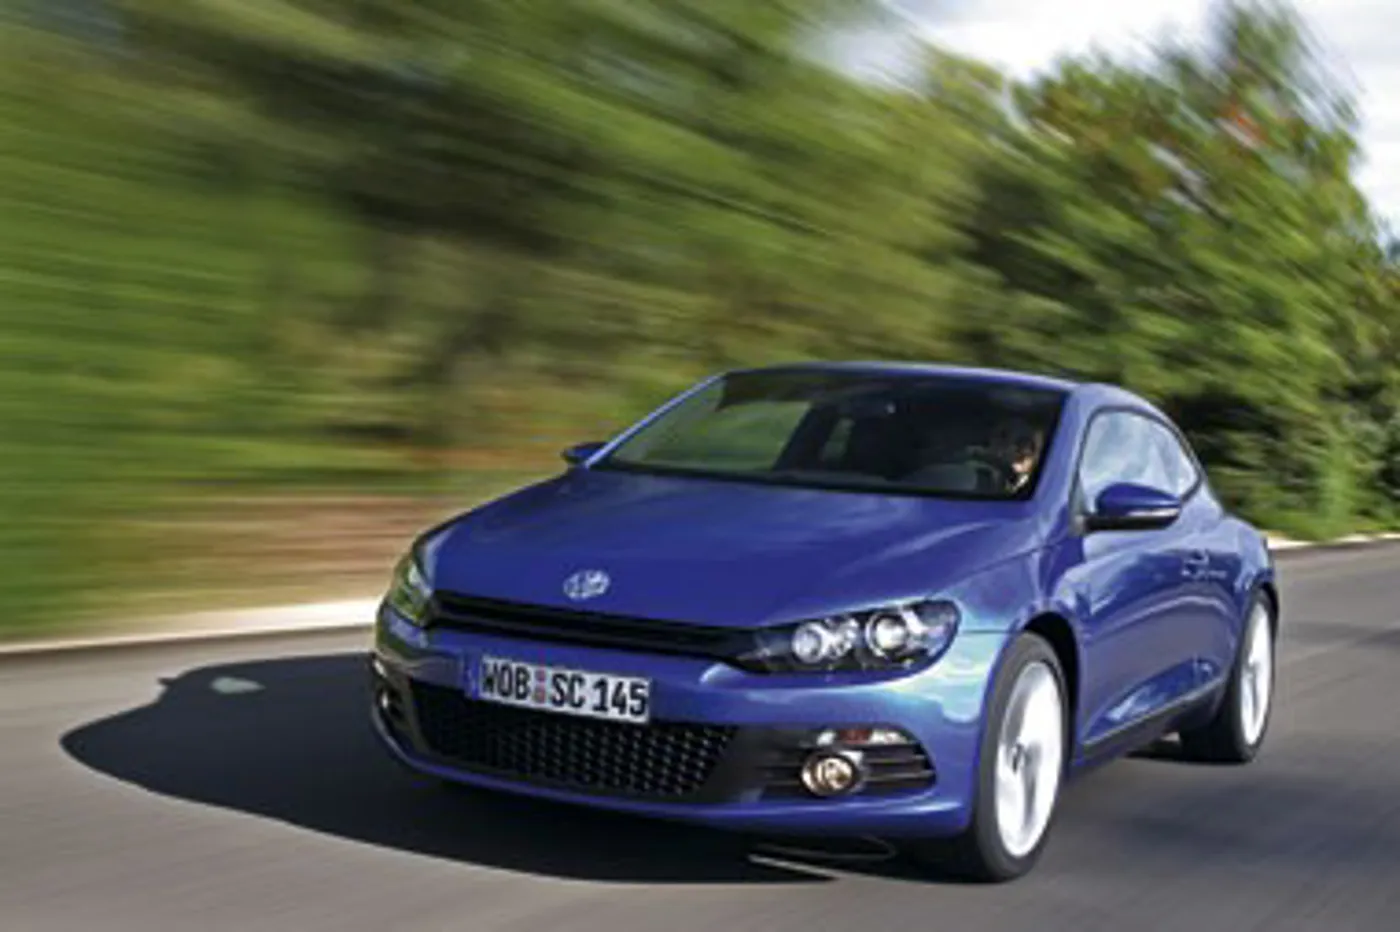 Volkswagen Scirocco review: the best of both worlds?